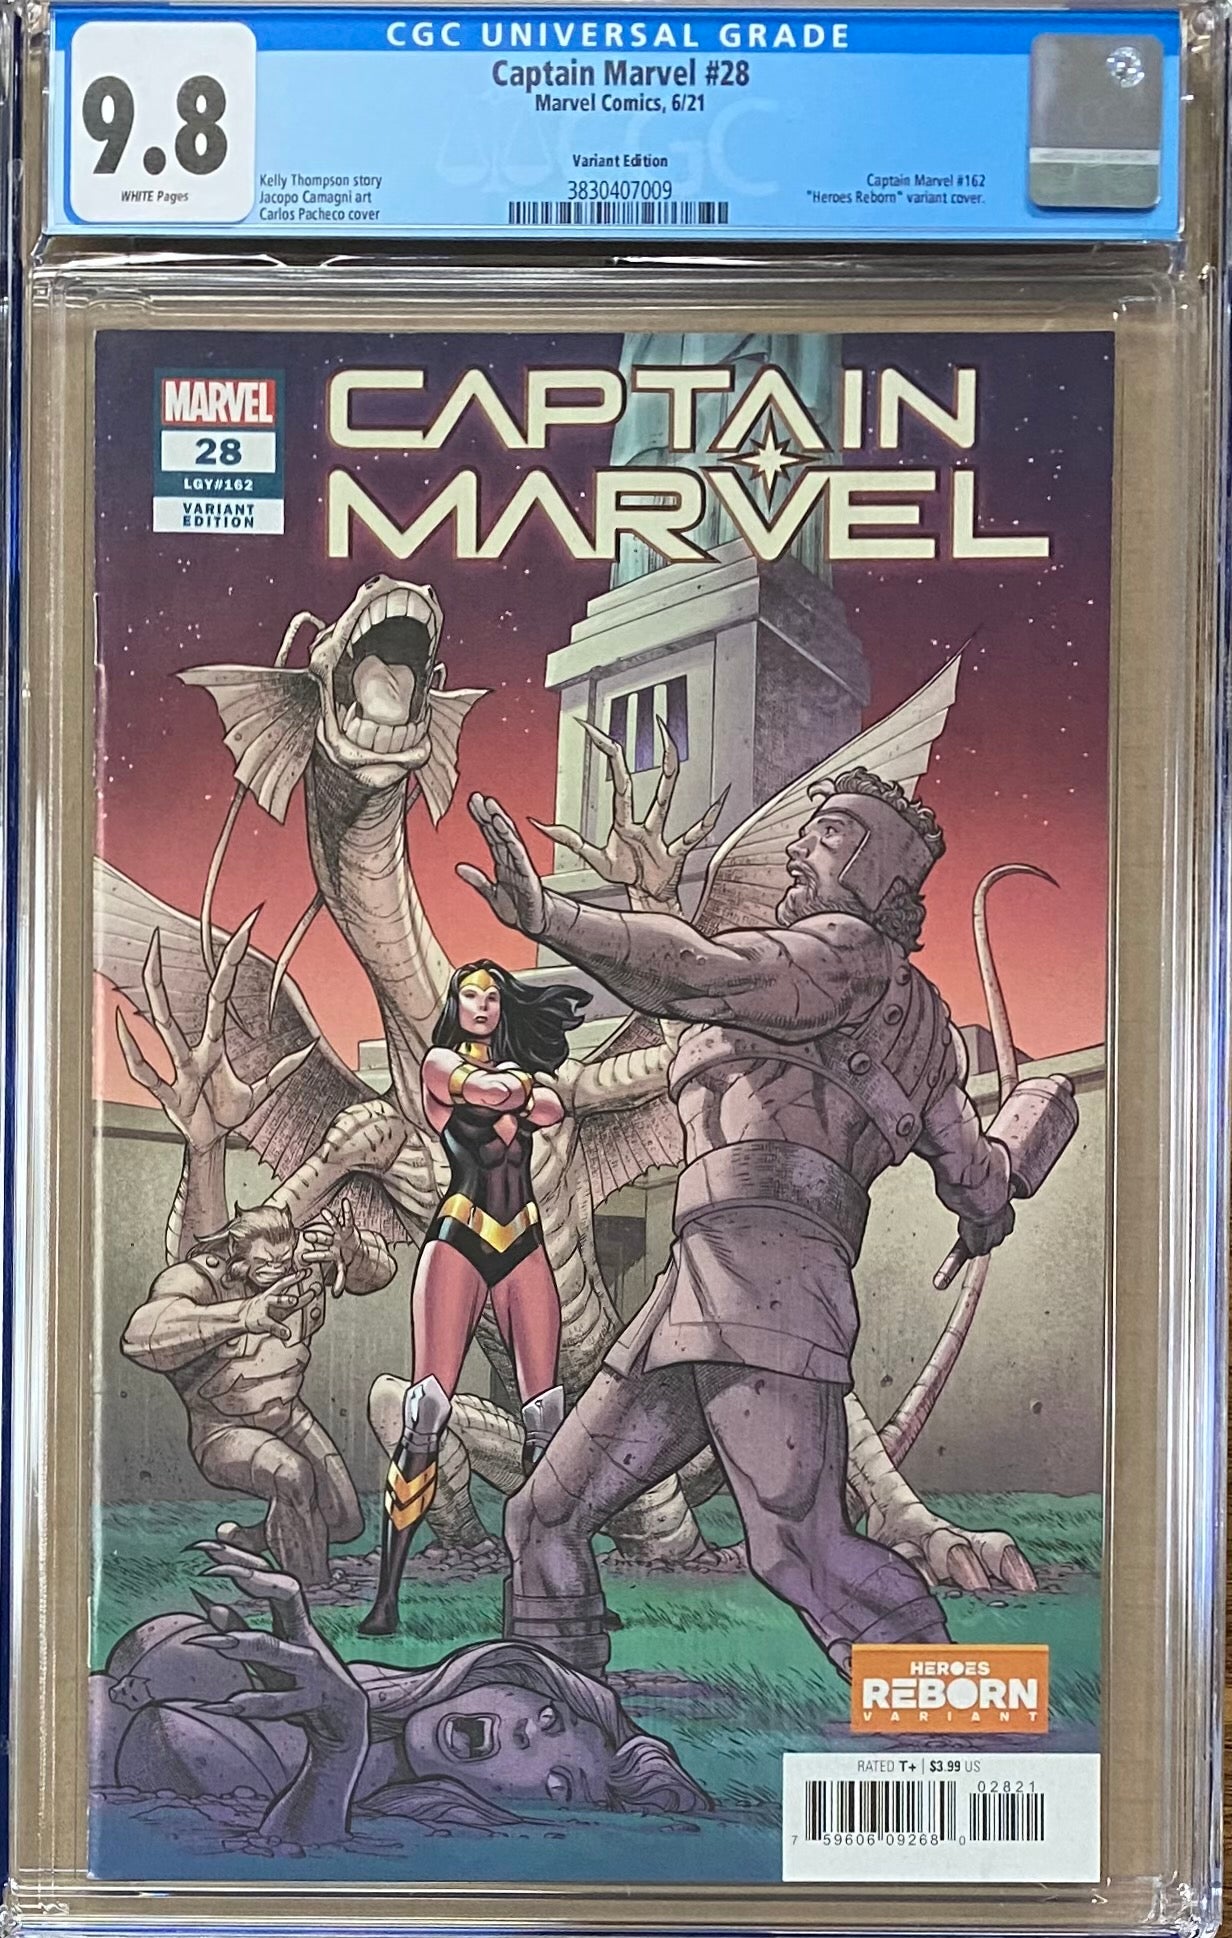 Captain Marvel #28 "Heroes Reborn" Variant CGC 9.8